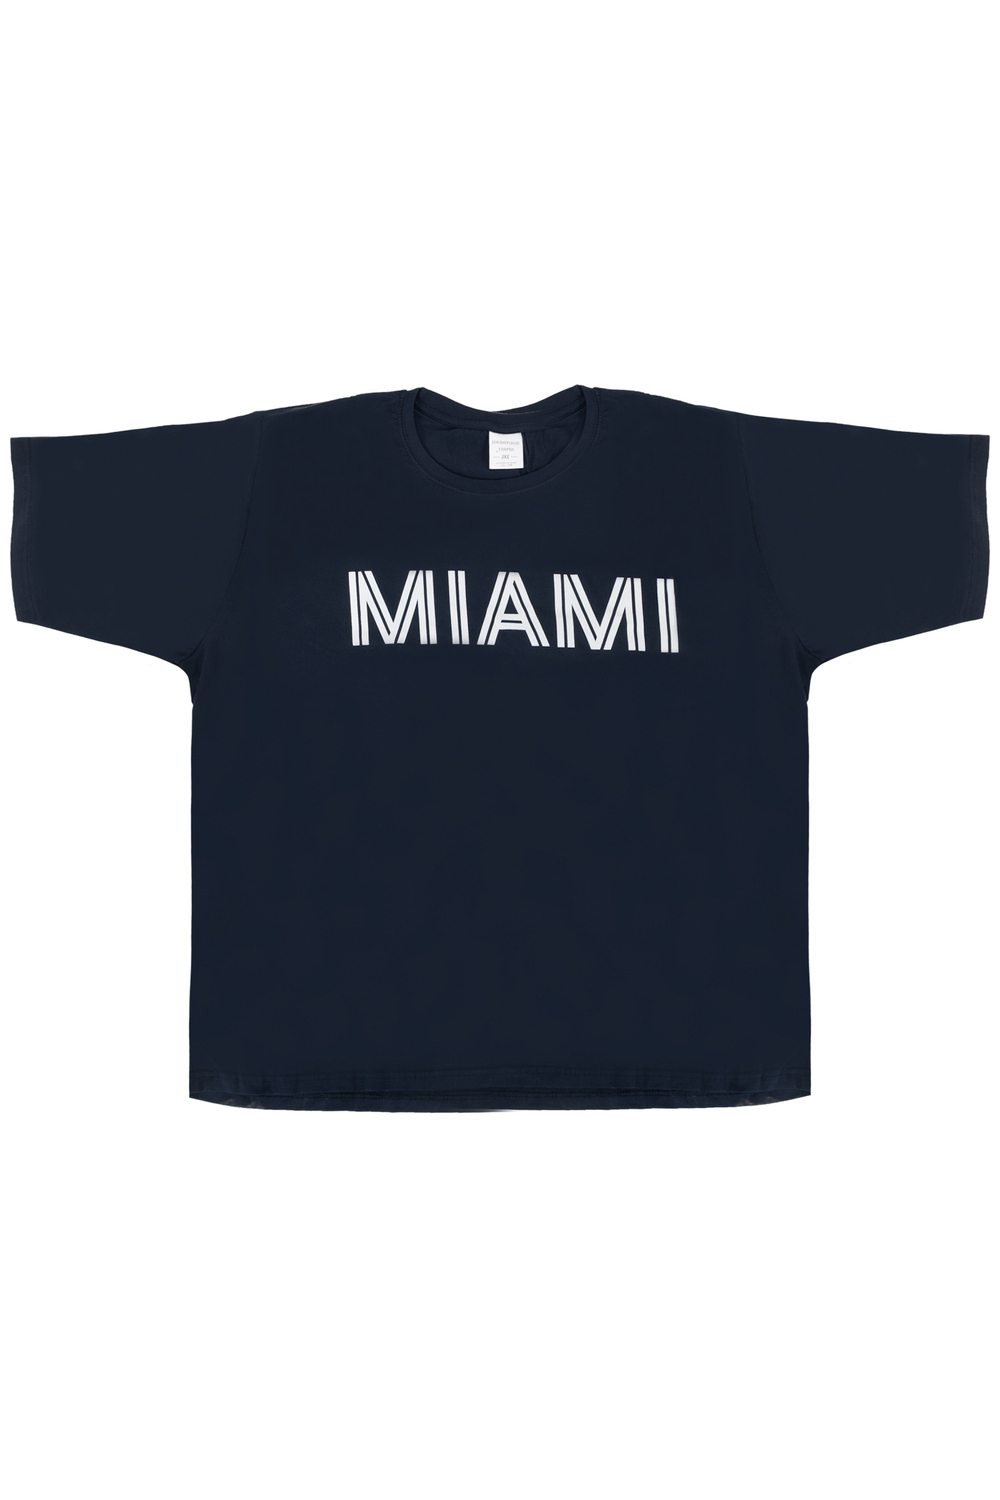 Miami, t-shirt col rond en coton - Marine - Taille plus